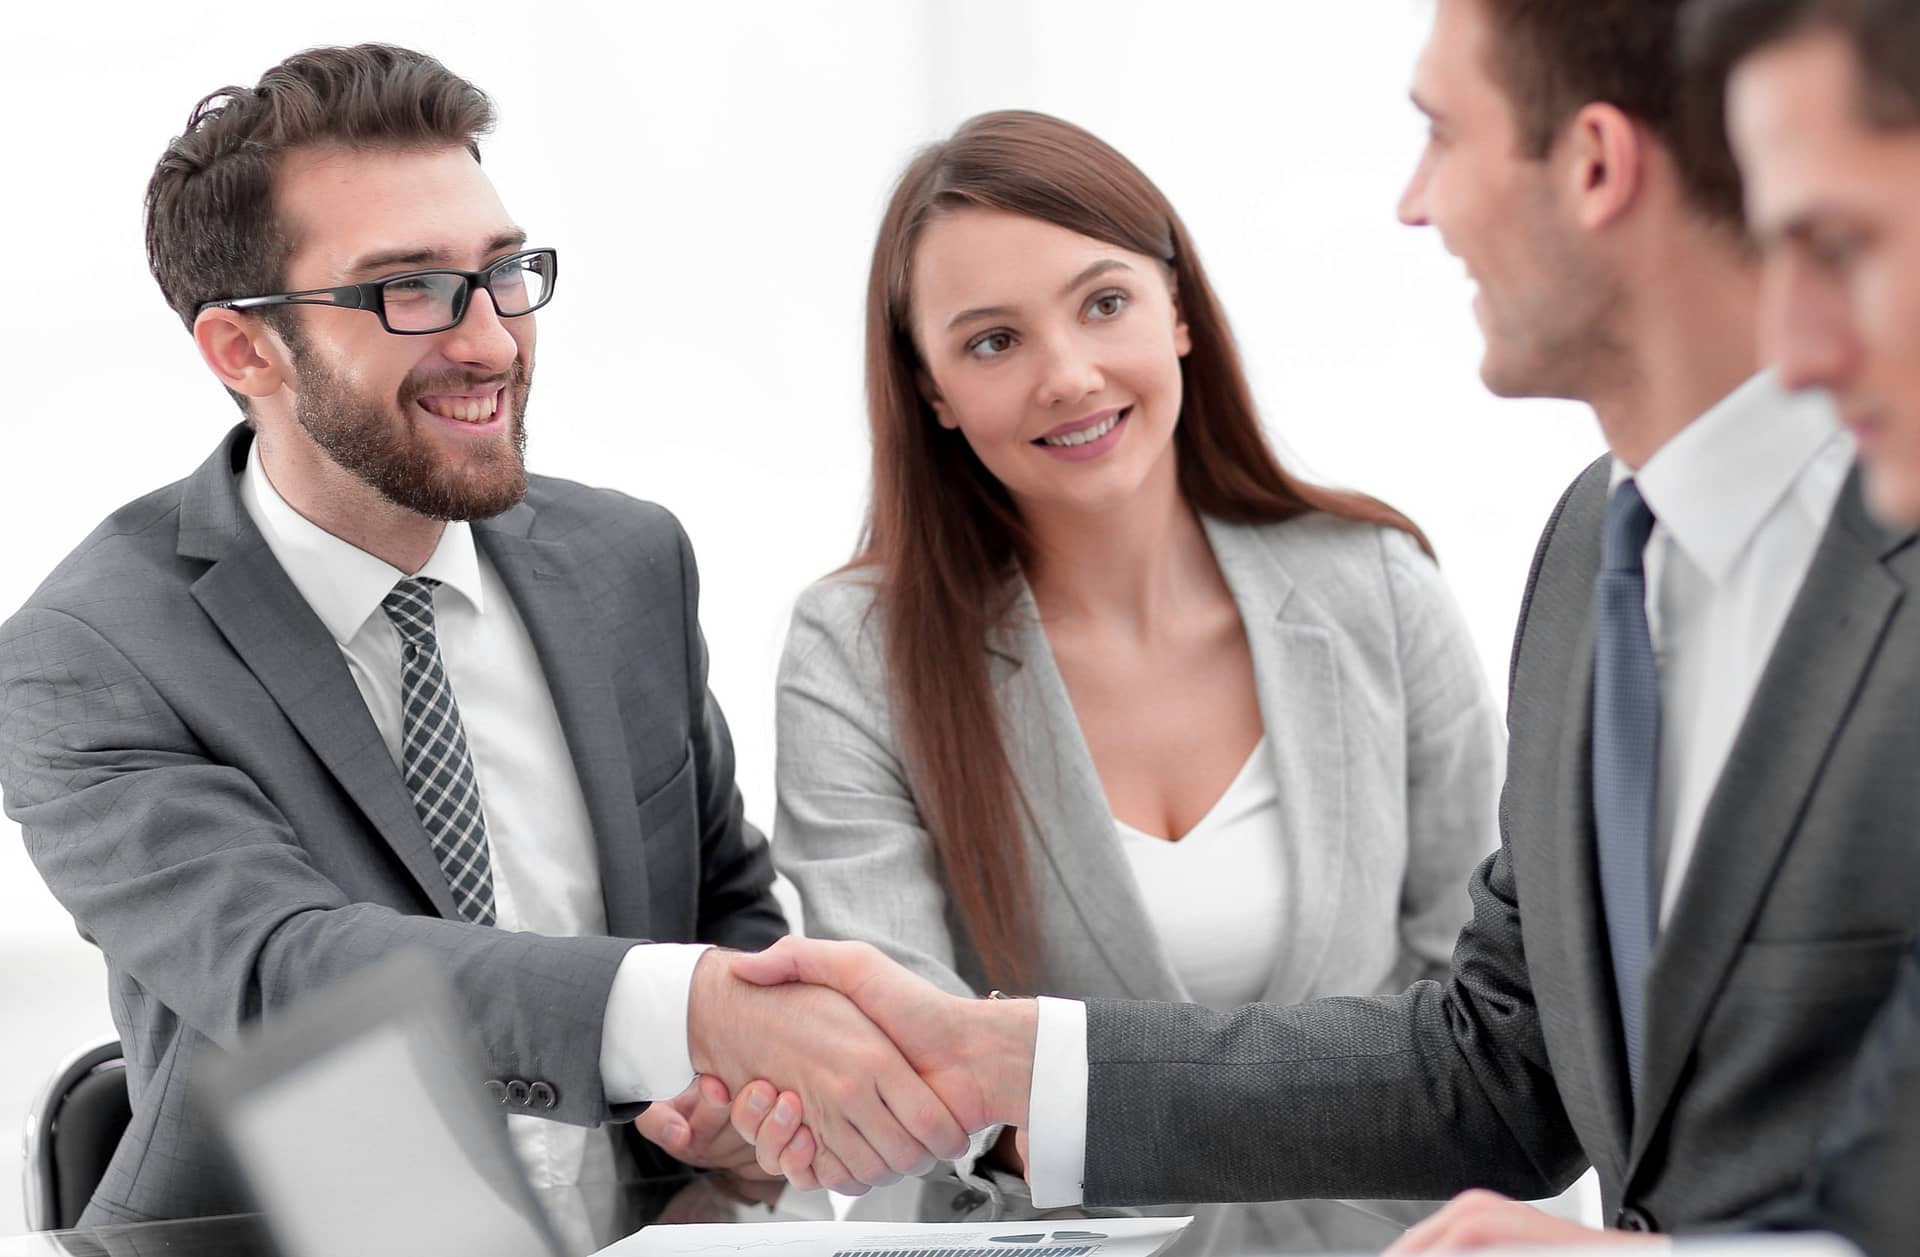 business people handshake after negotiations